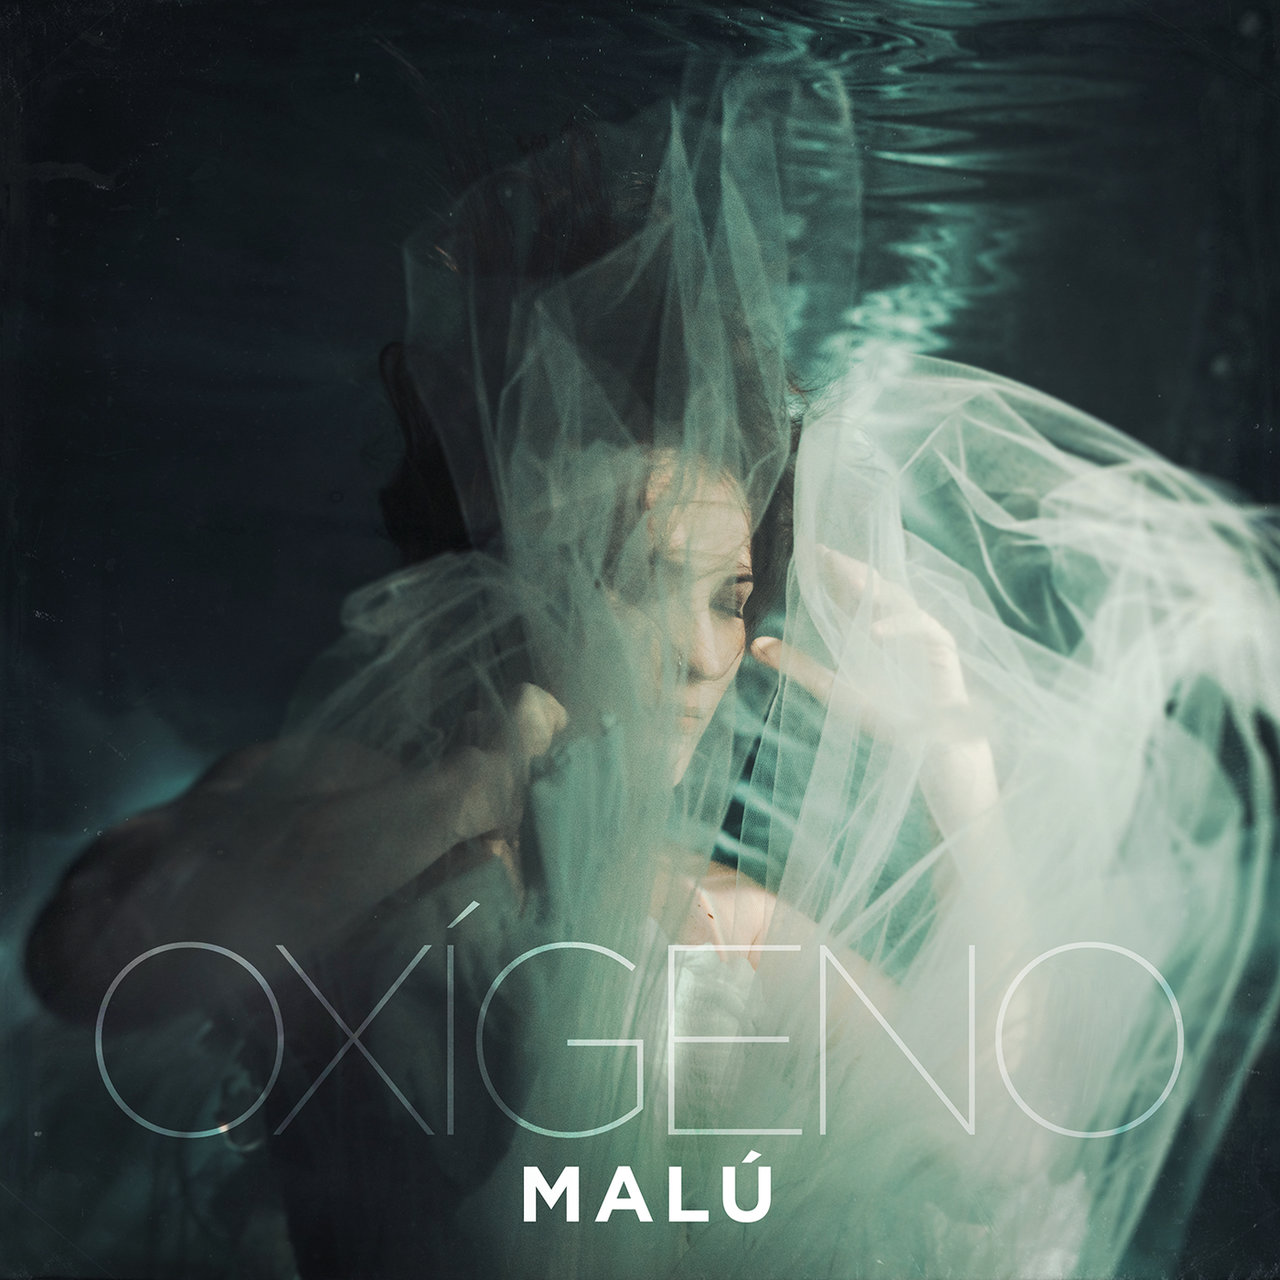 Malú Oxígeno cover artwork